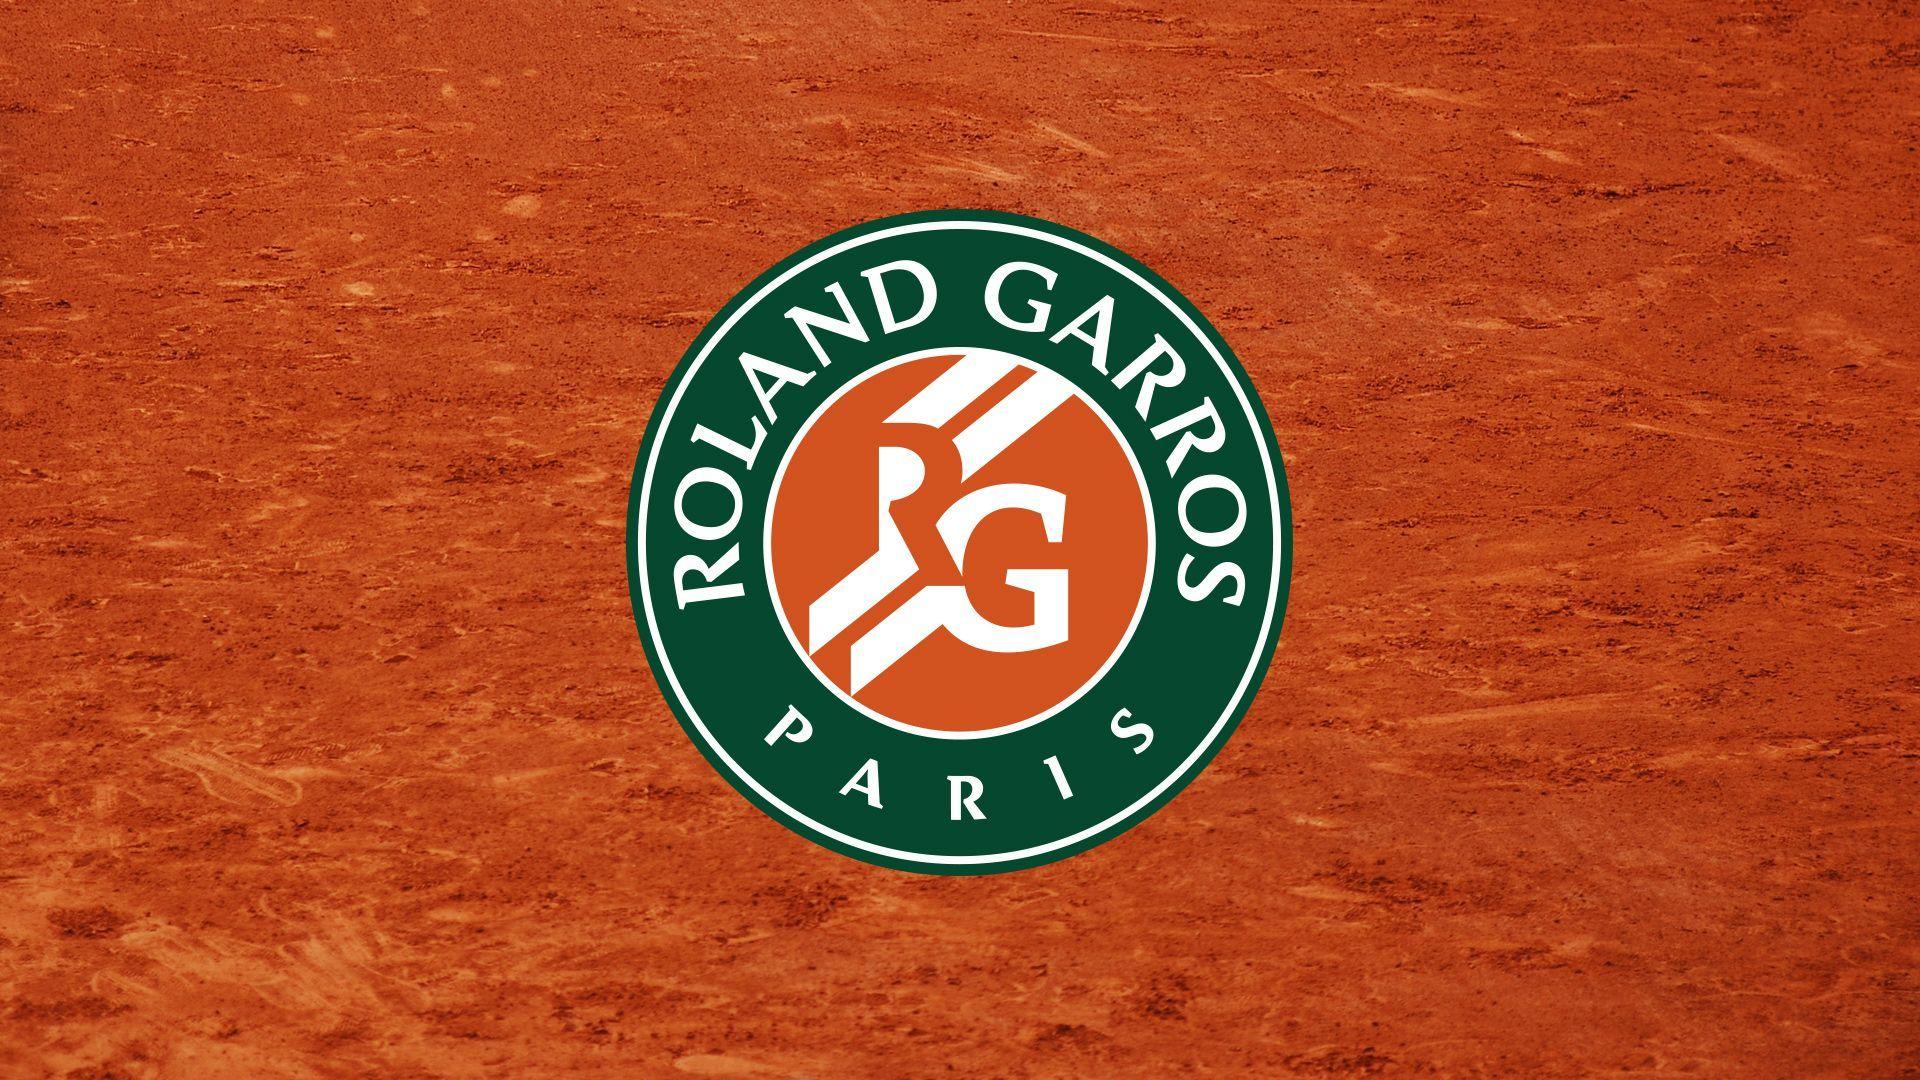 Roland Garros Wallpapers Top Free Roland Garros Backgrounds